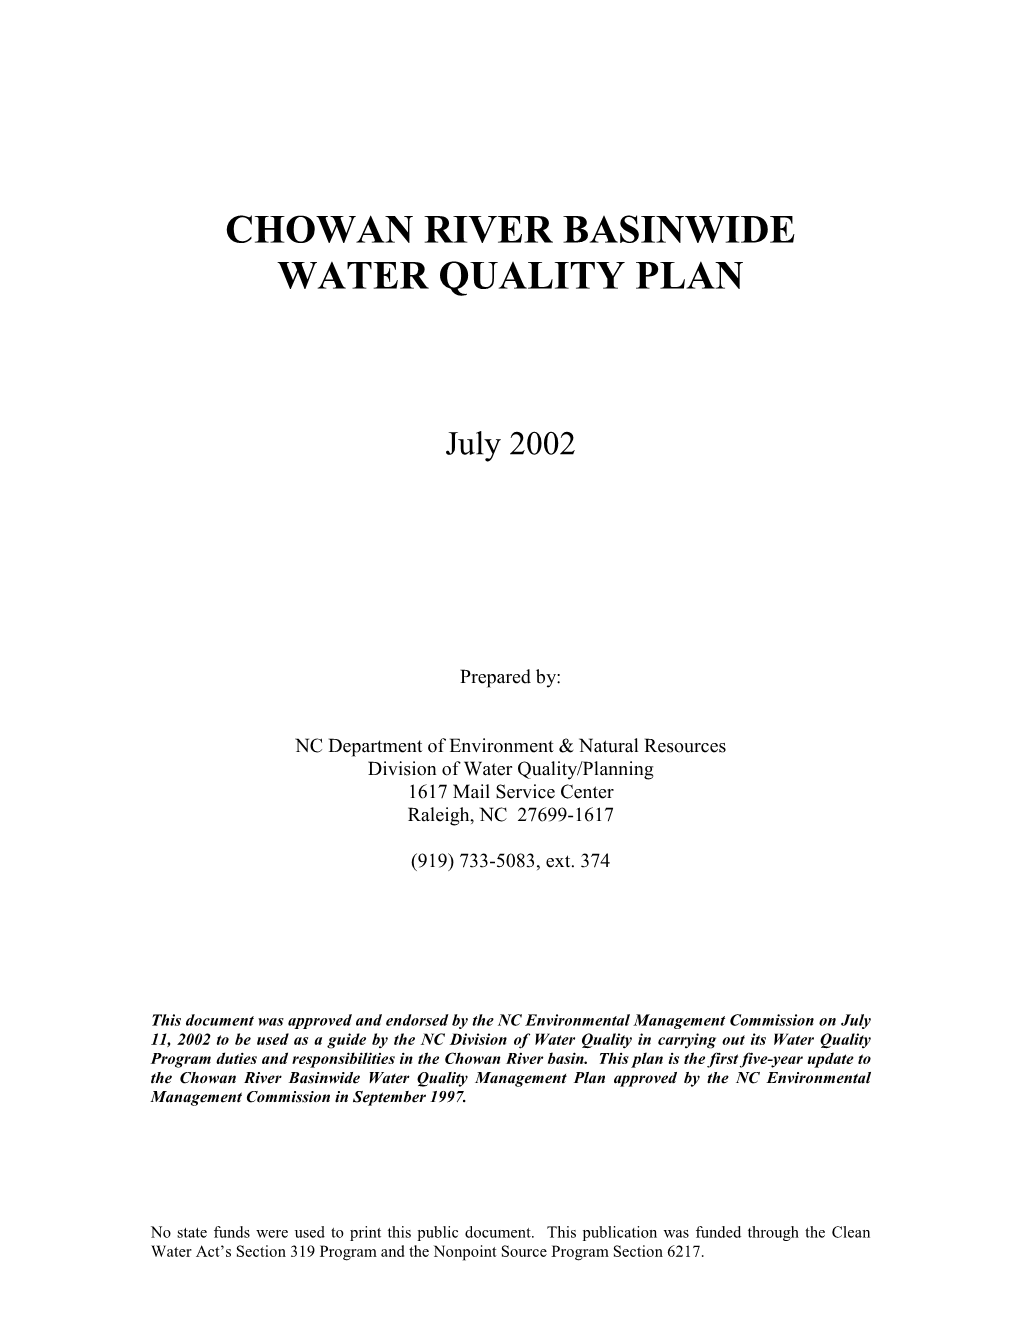 Chowan River Basinwide Water Quality Plan